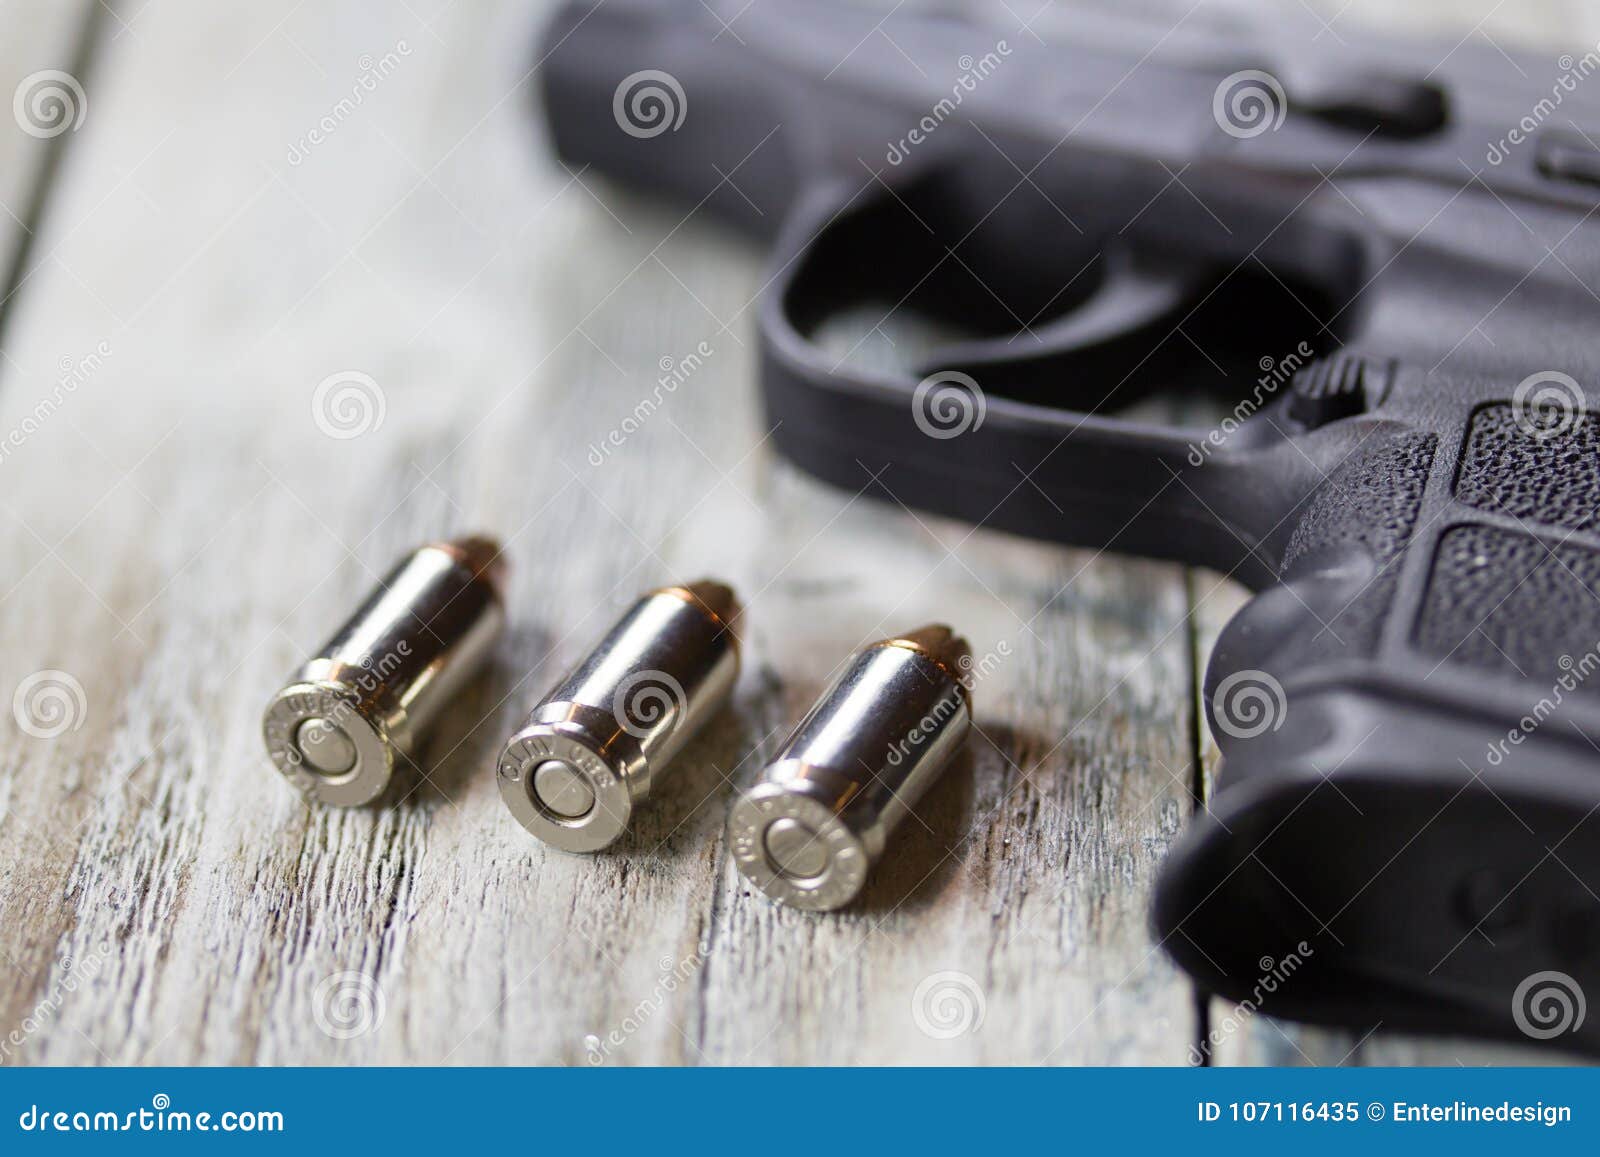 pistol handgun and bullets